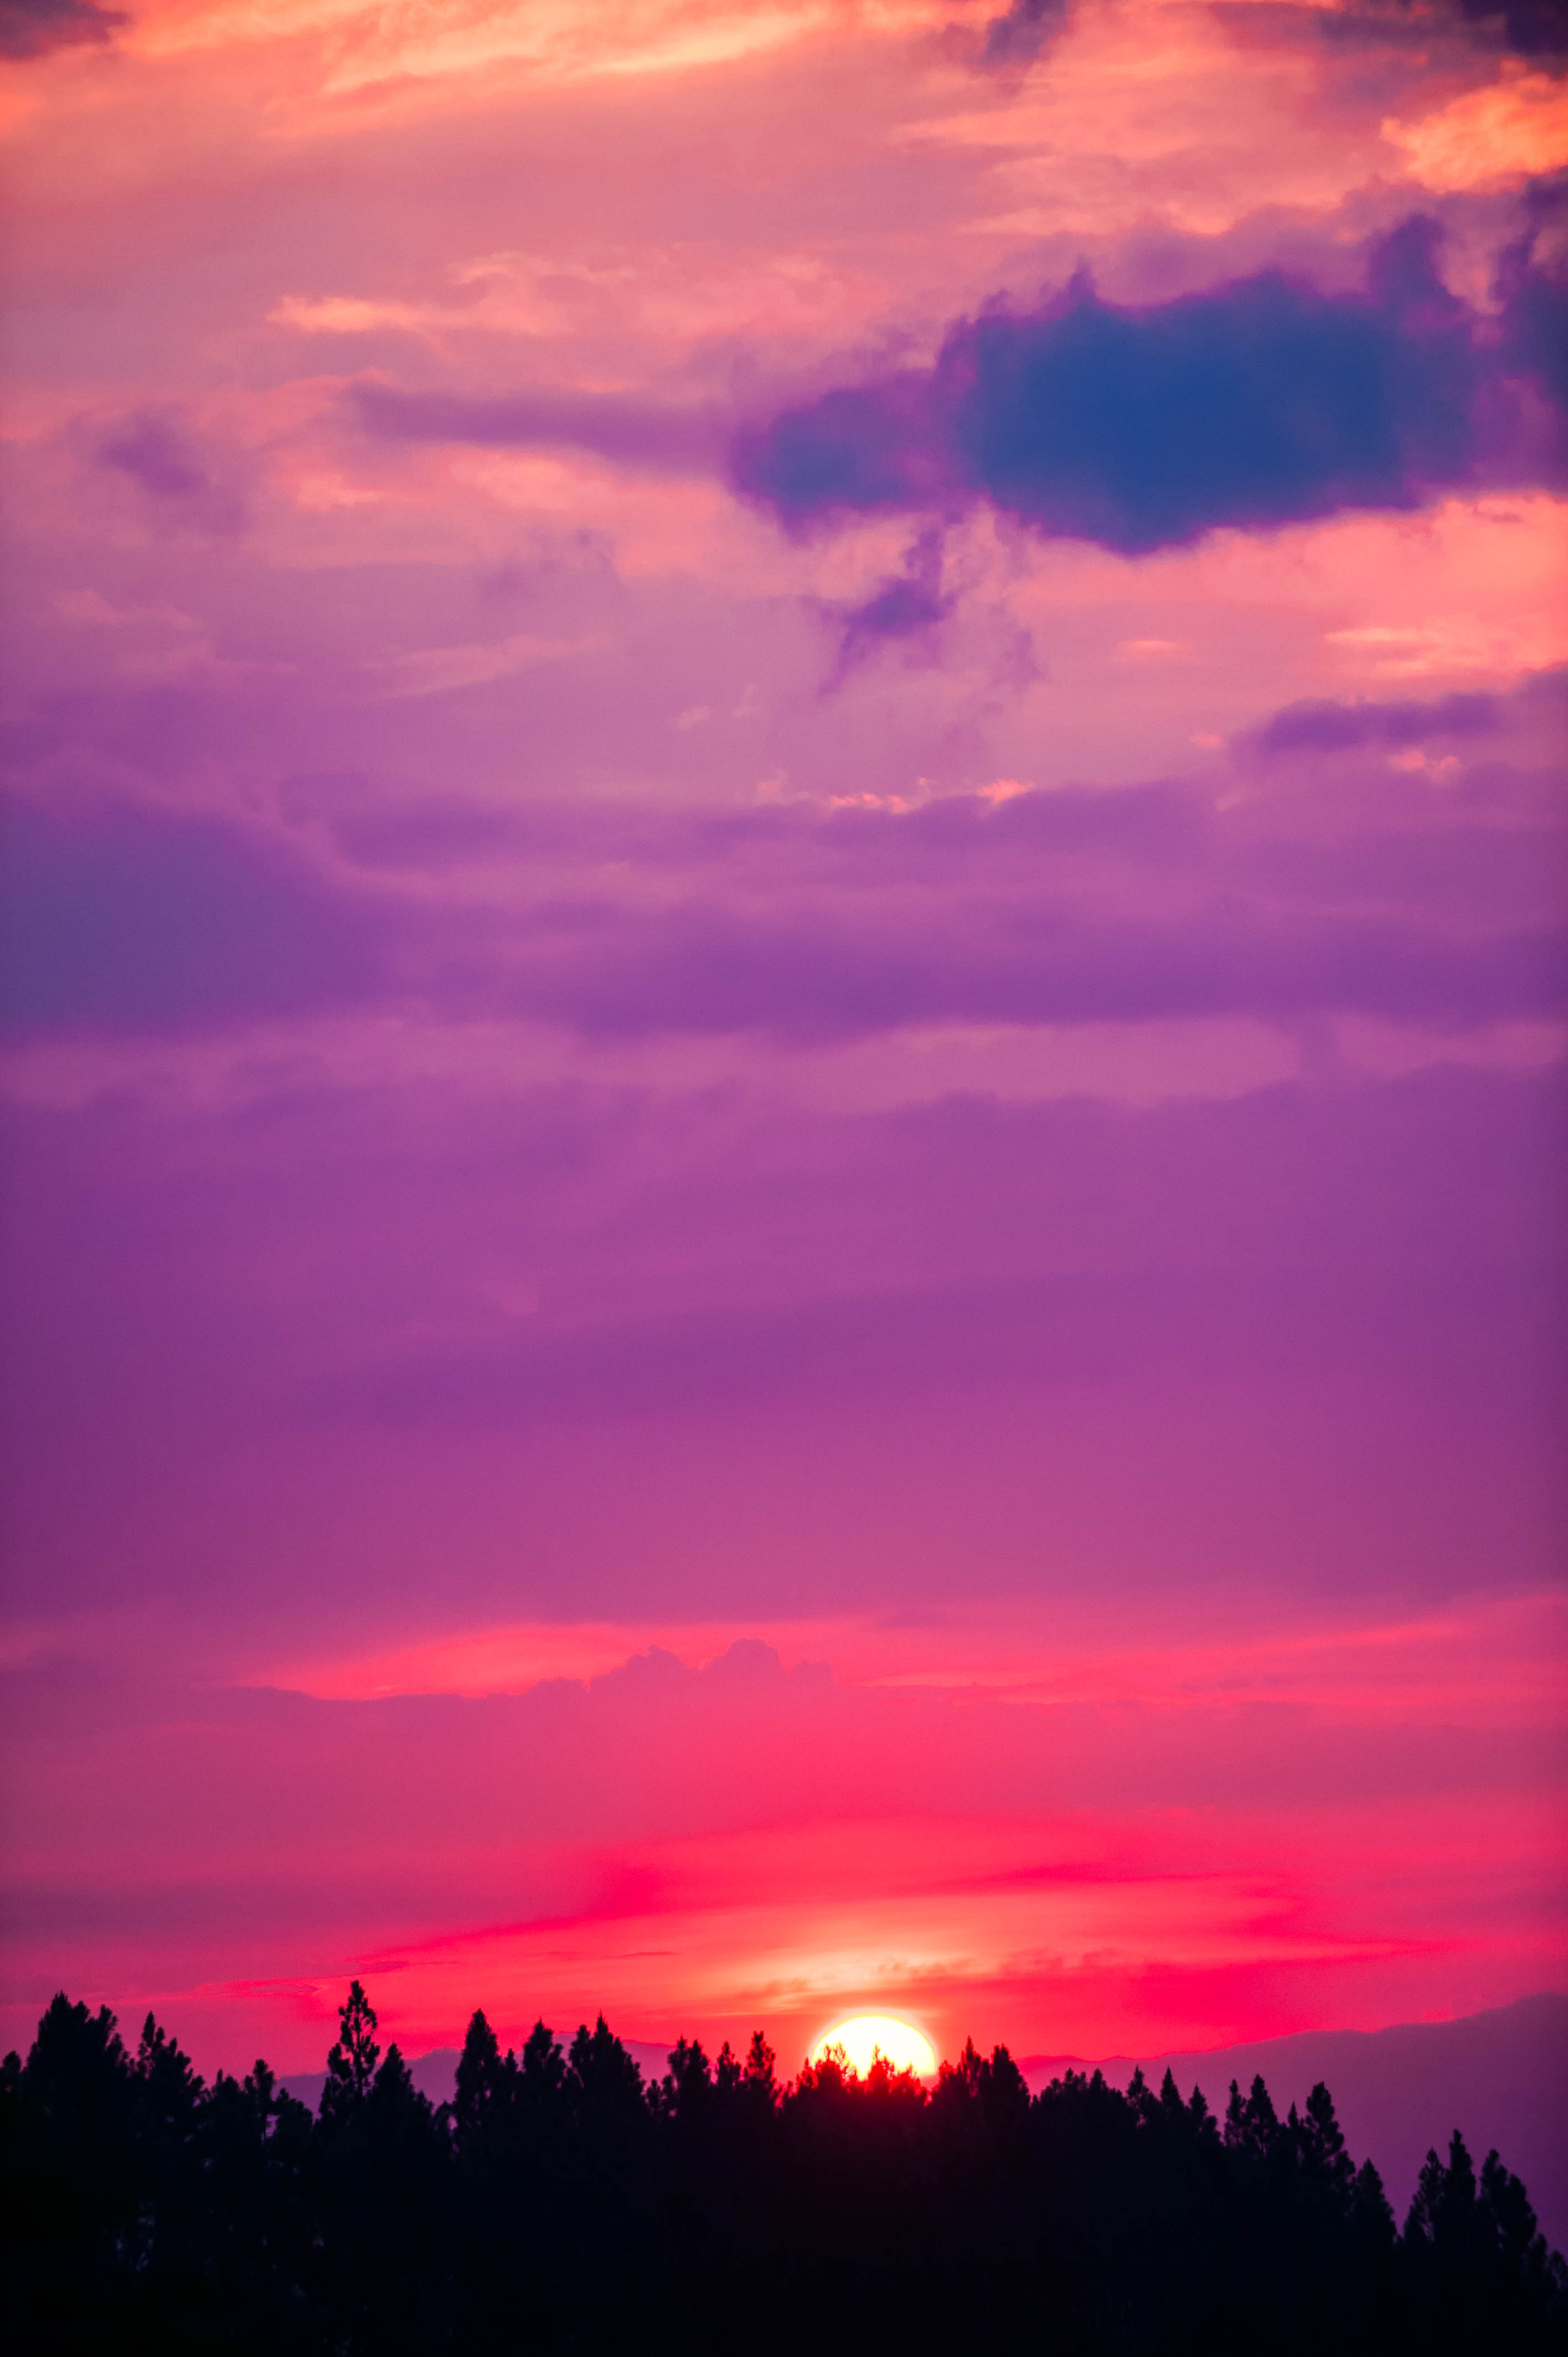 Pink Sunset Wallpaper Macbook : We have a massive amount of desktop and